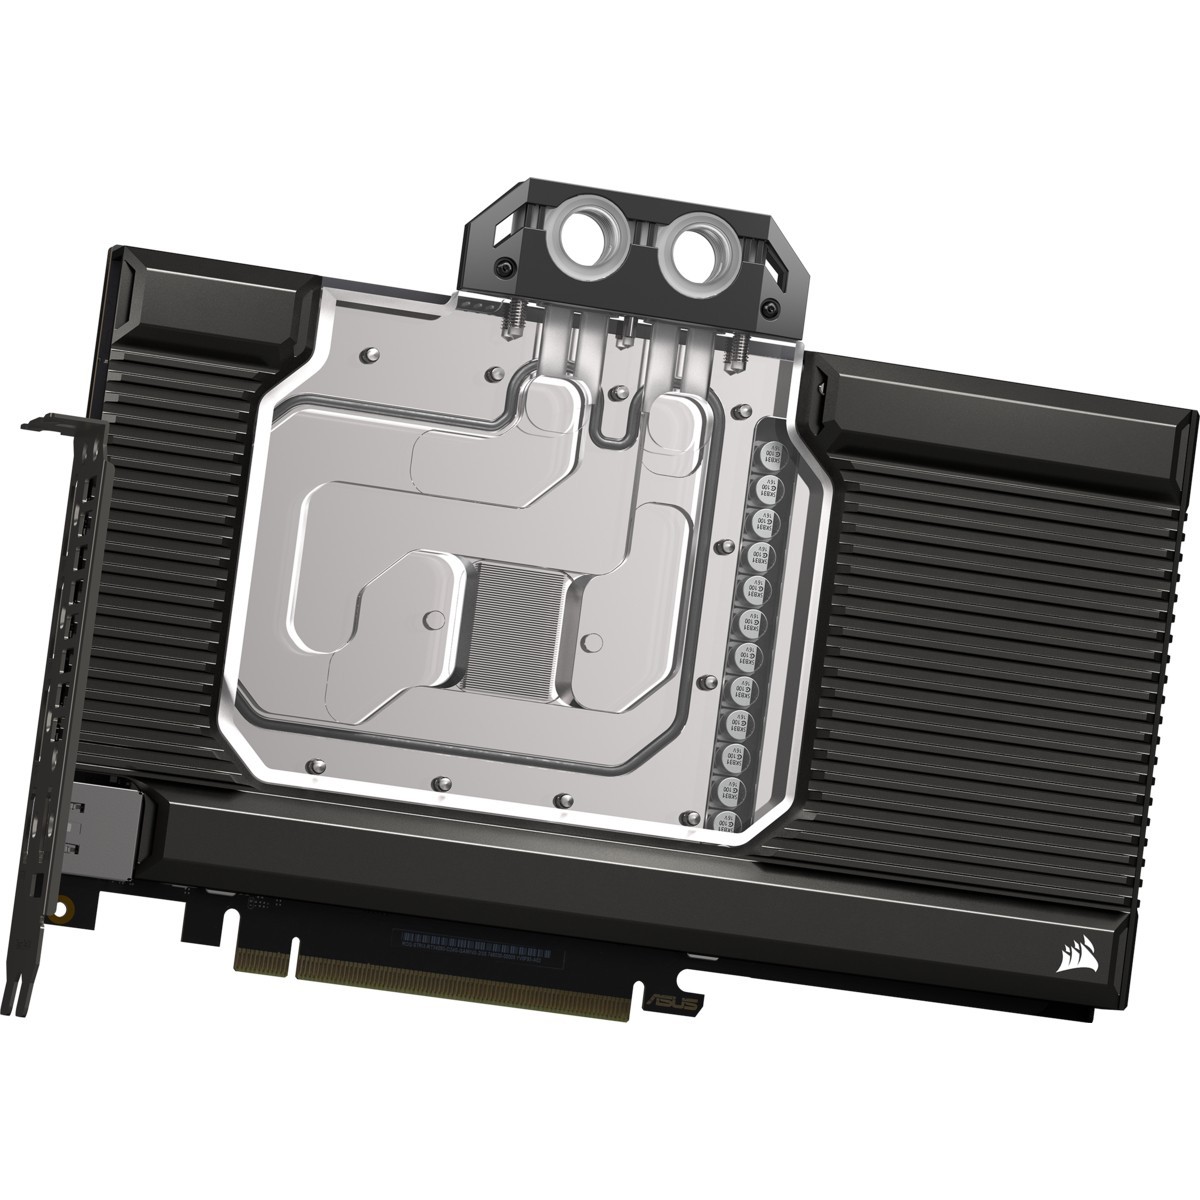 Corsair Hydro X Series XG7 RGB 40-SERIES STRIX-TUF GPU Wat